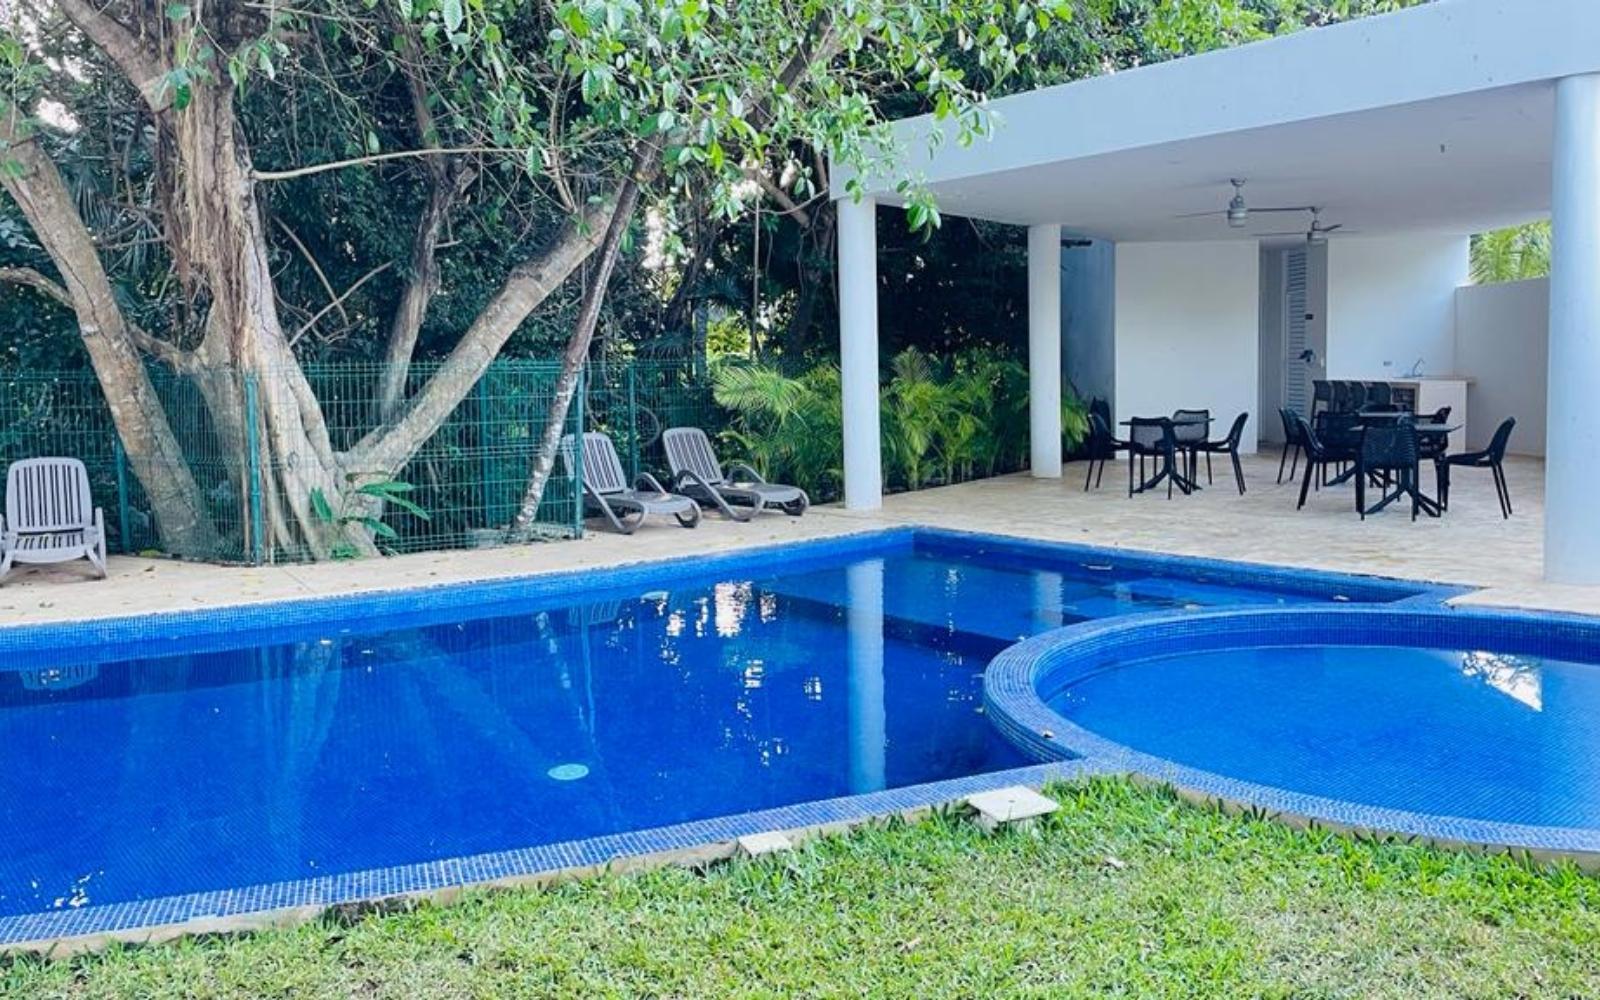 3 bedroom house with private pool at El Tigrillo, Playa del Carmen.